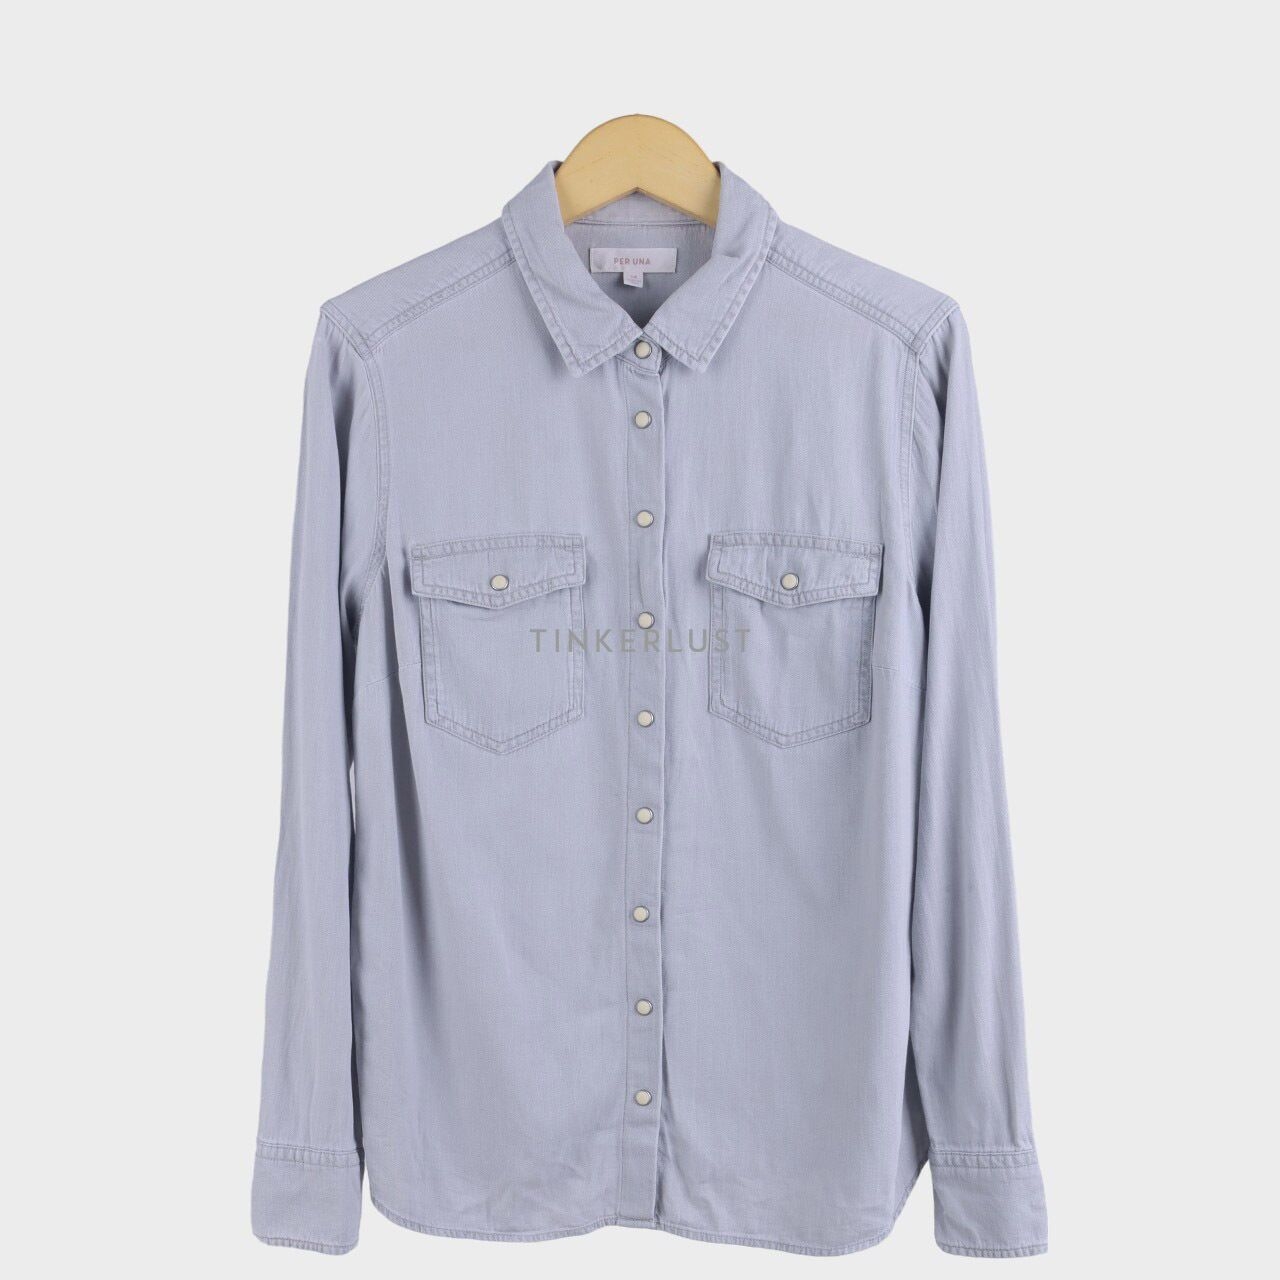 Marks & Spencer Light Grey Shirt